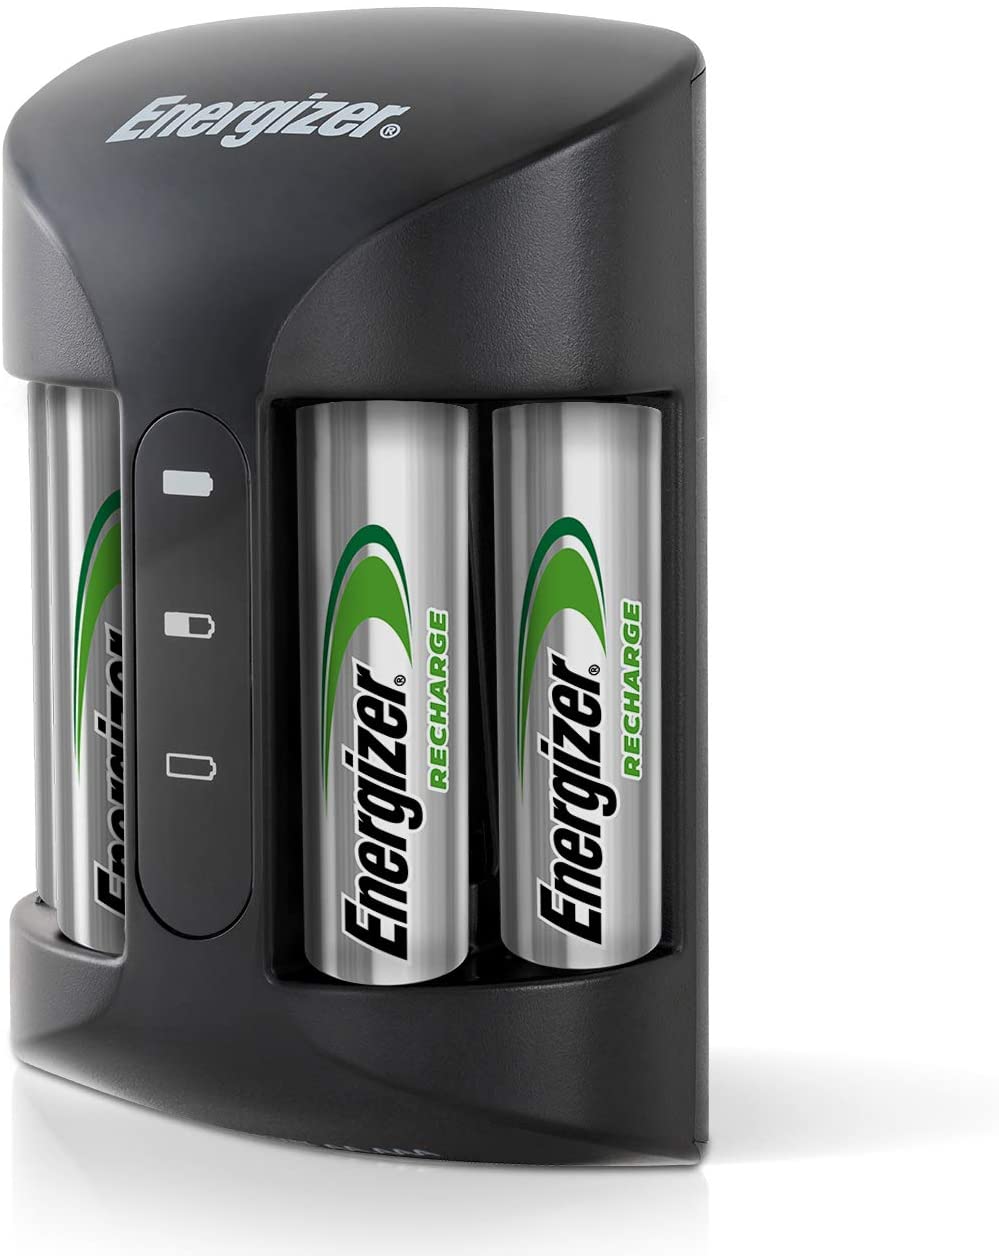 Energize Universal AA & AAA Battery Charger